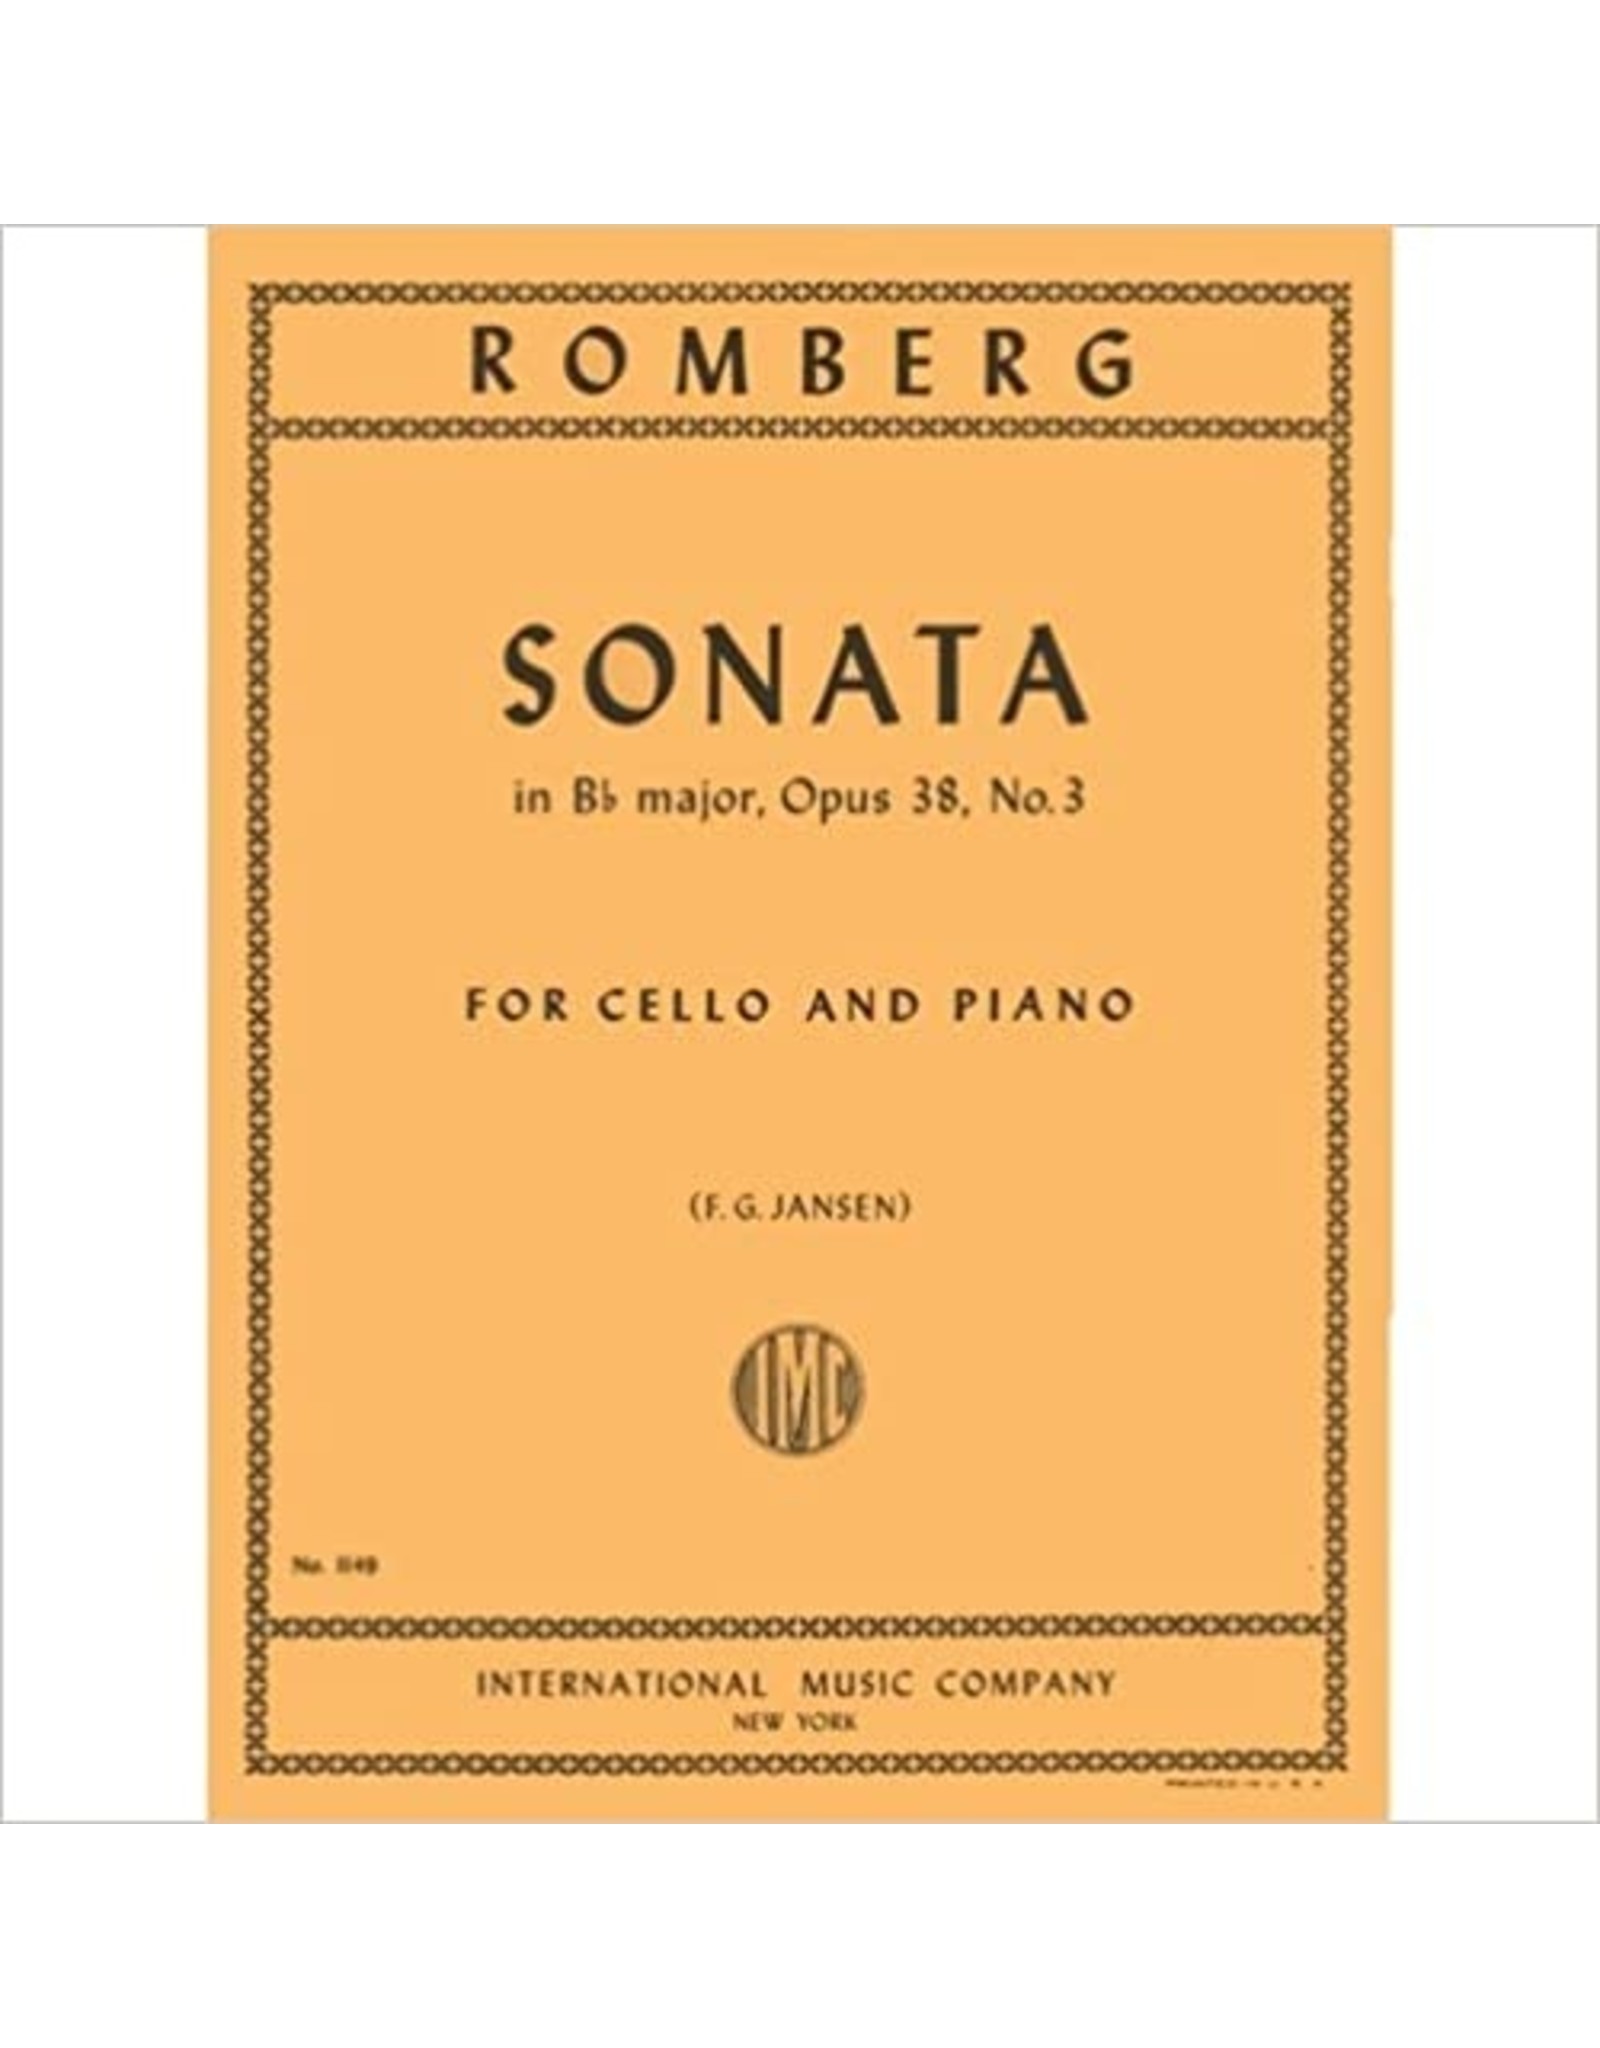 International Romberg - Sonata in B flat major opus 38, no. 3